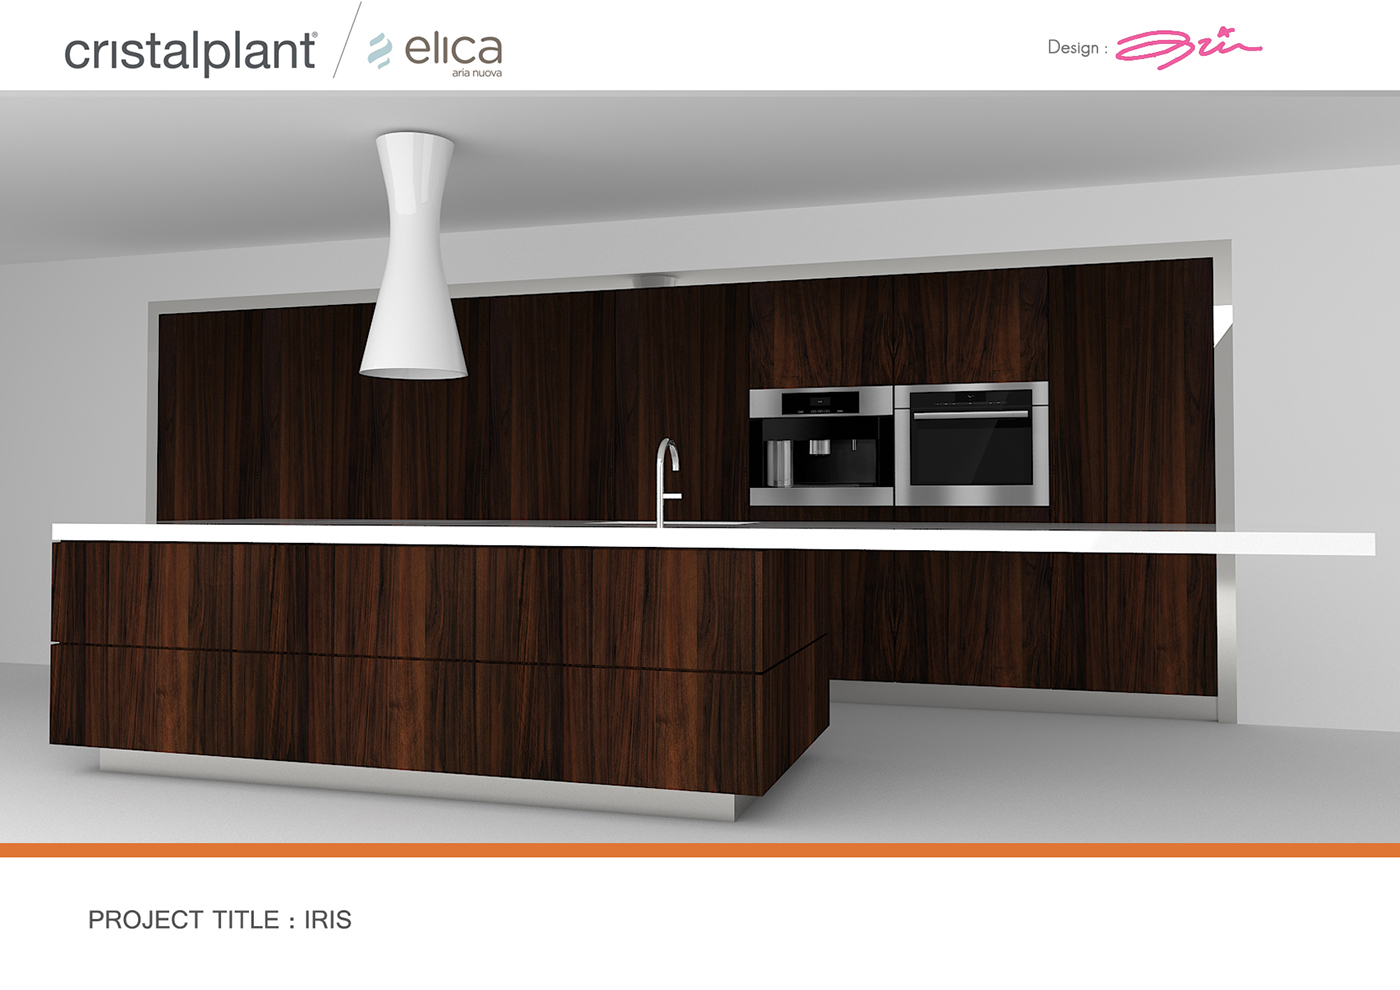 cristalplant design contest design contest elica kitchen home appliances